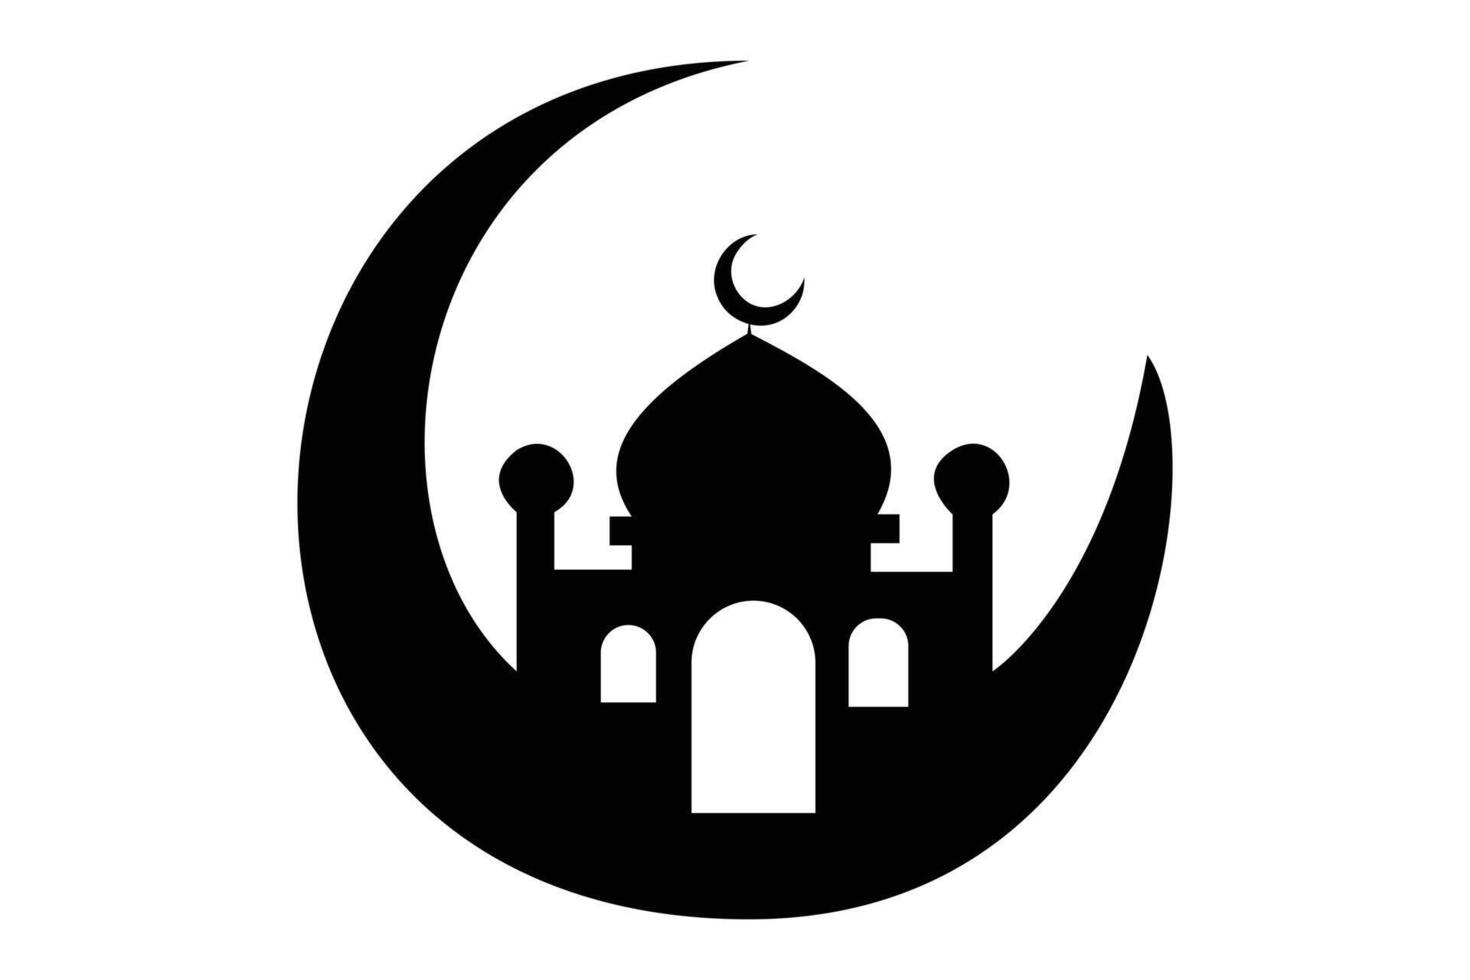 moschea icona, islamico icone, Ramadan kareem, eid mubarak, silhouette logo vettore illustrazione design